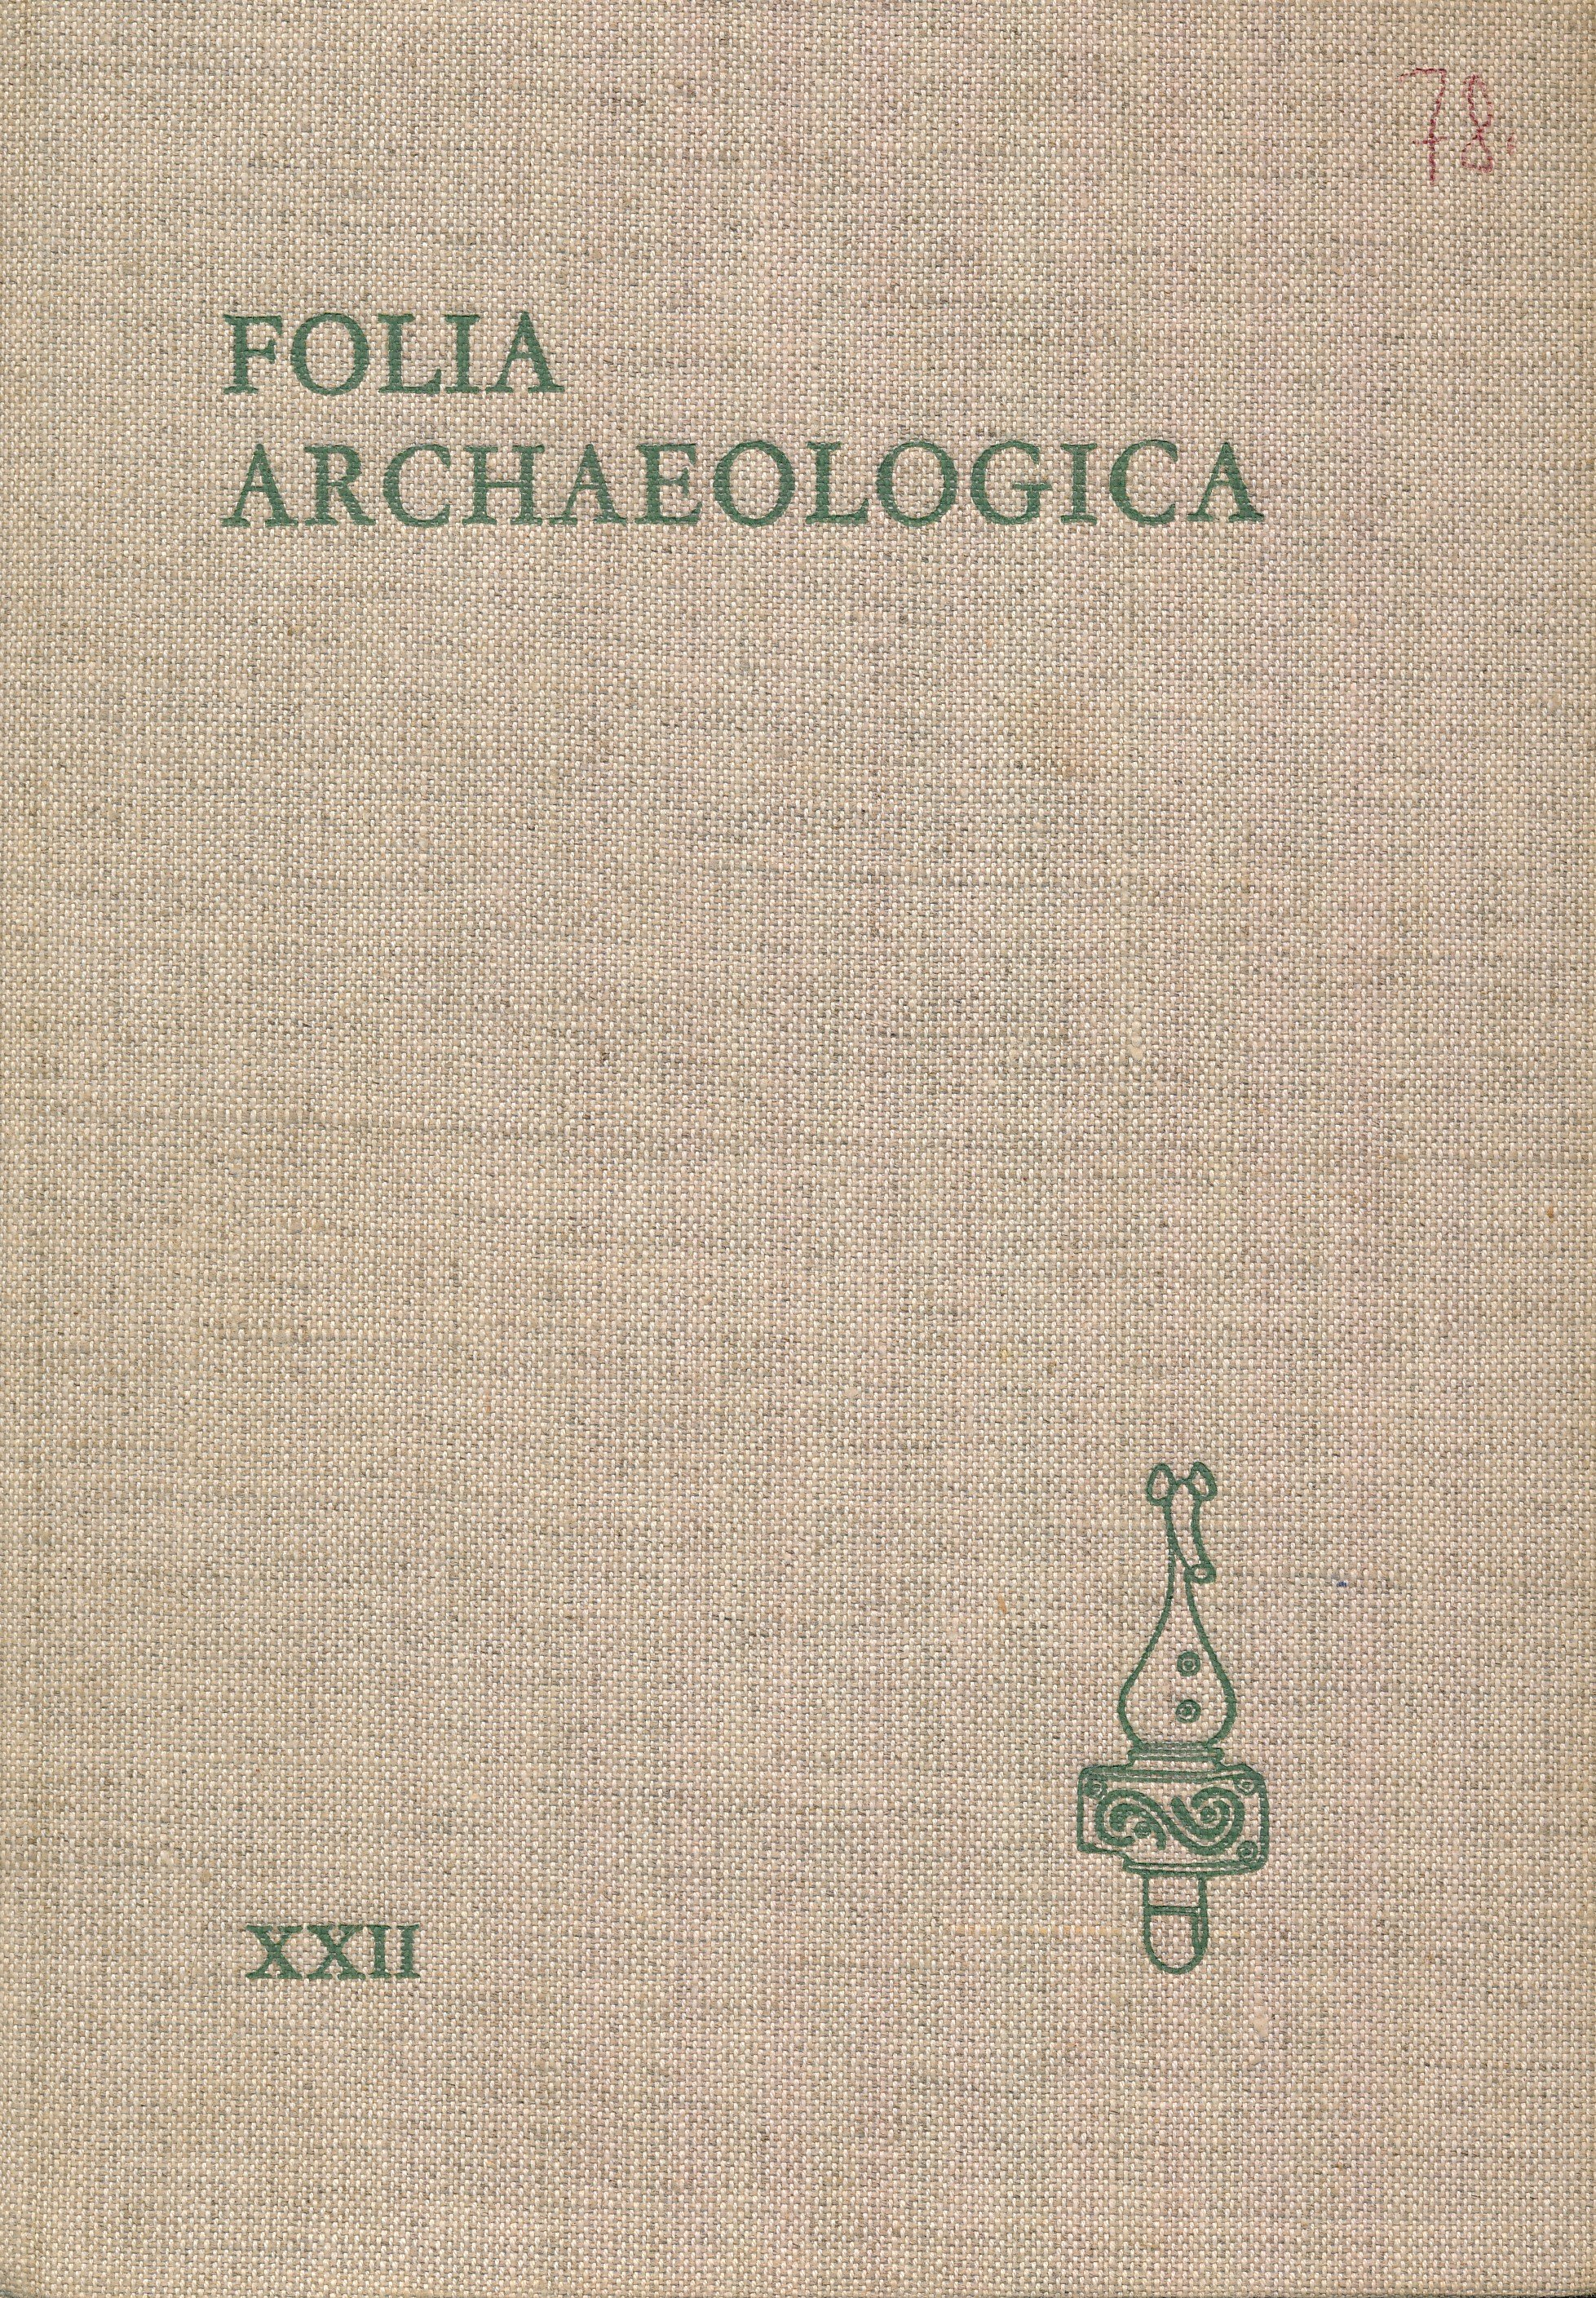 Folia archaeologica XXII. (Erkel Ferenc Területi Múzeum, Gyula CC BY-NC-SA)